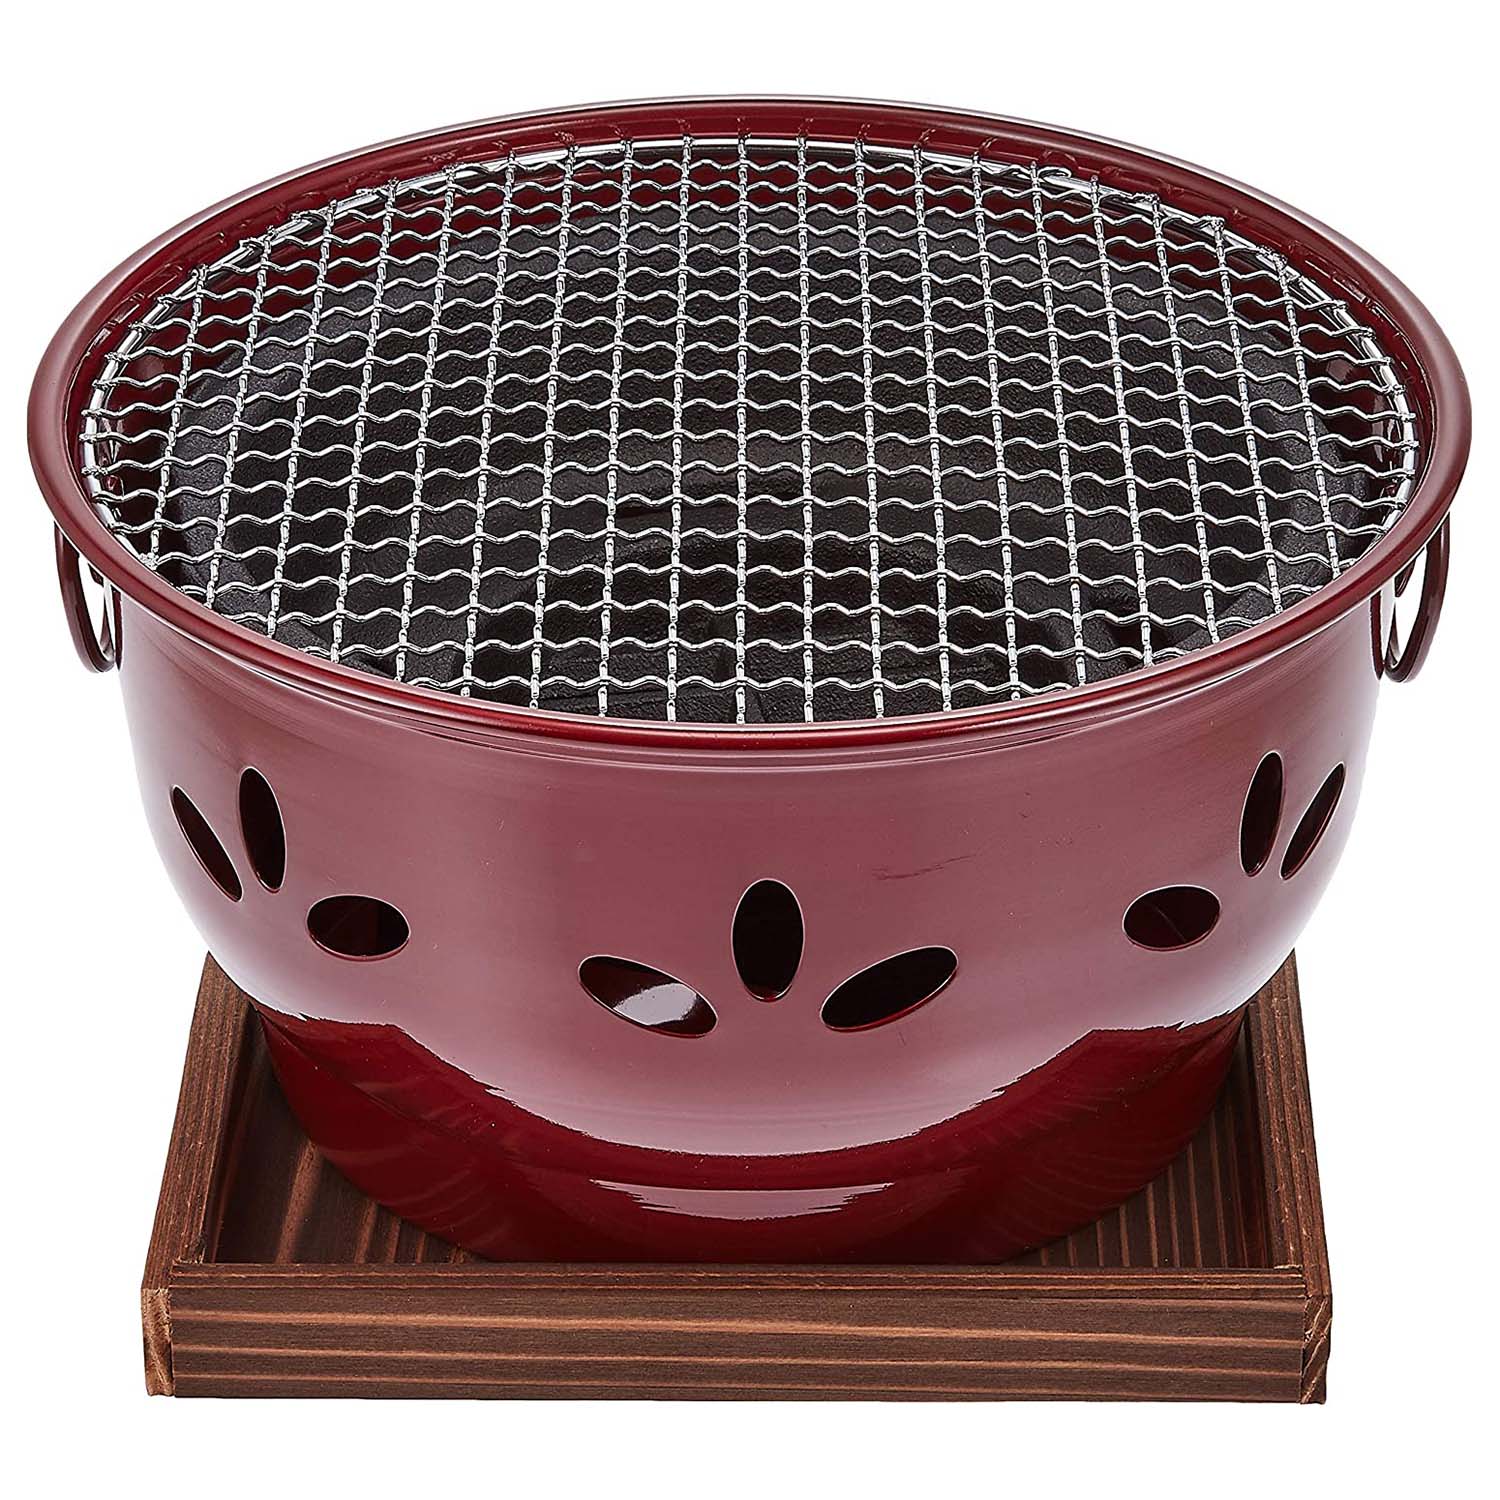 Ikenaga Ironworks: Nambu Cast Iron Tea Kettle Nozomi - Induction Heating  (IH) Compatible